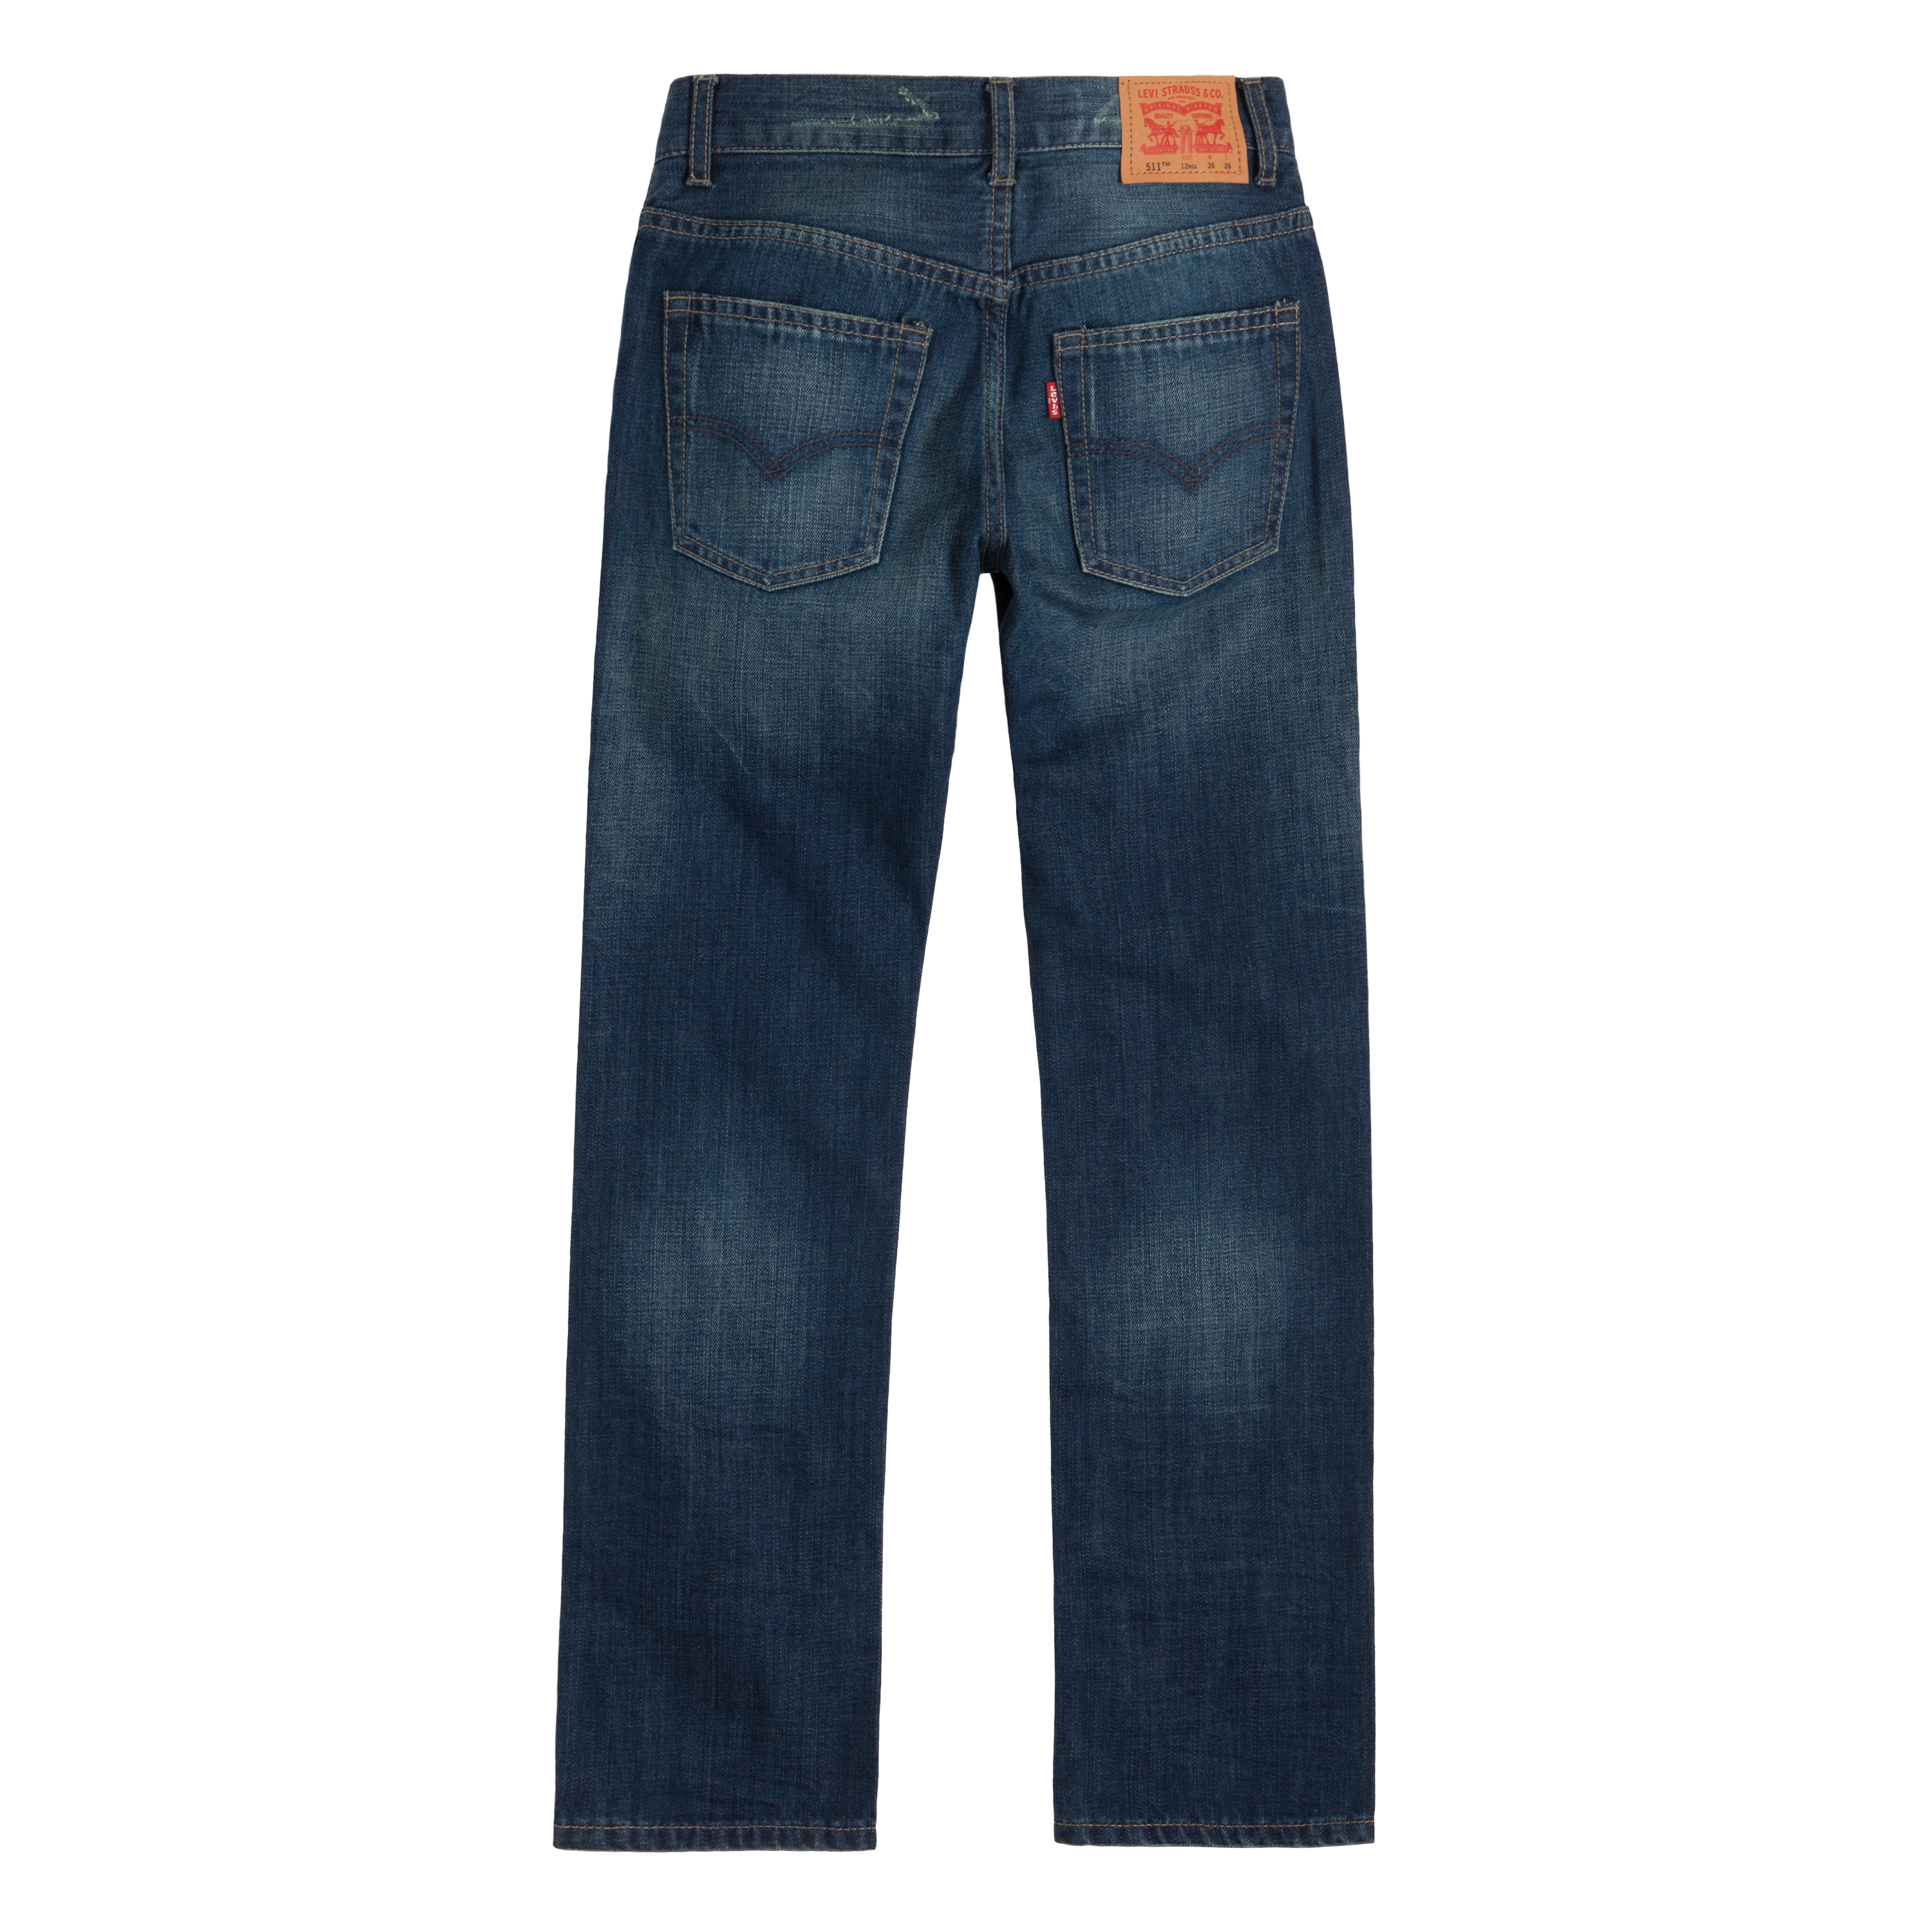 Levi's Boys' 511 Slim Fit Jeans, Sizes 4-20 - image 2 of 3